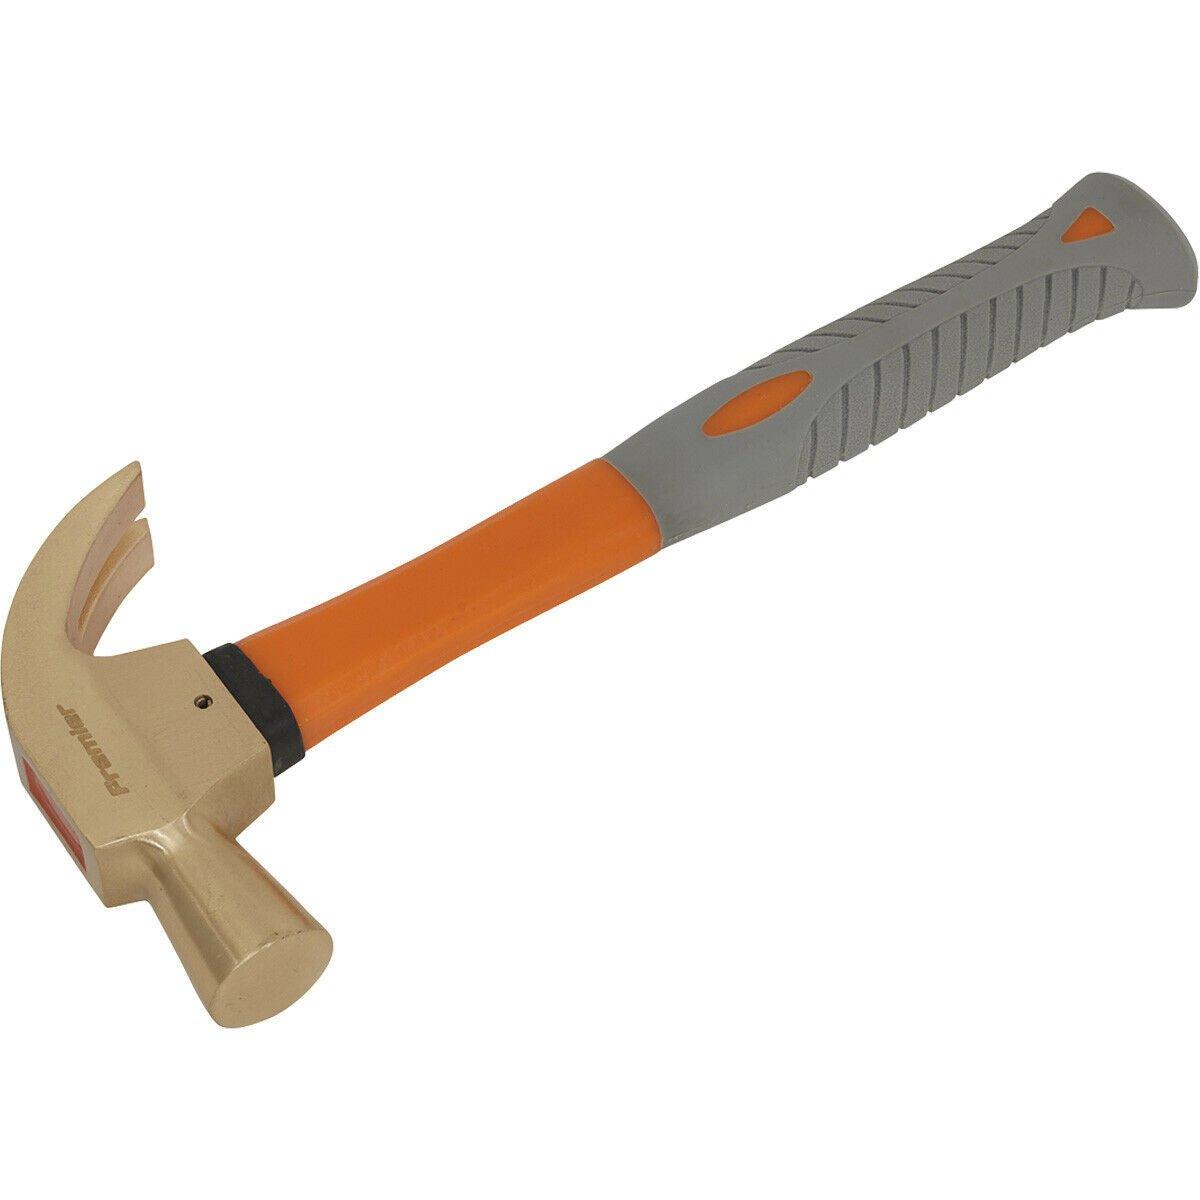 24oz Non-Sparking Claw Hammer - Fibre Glass Shaft - Shock Absorbing Grip